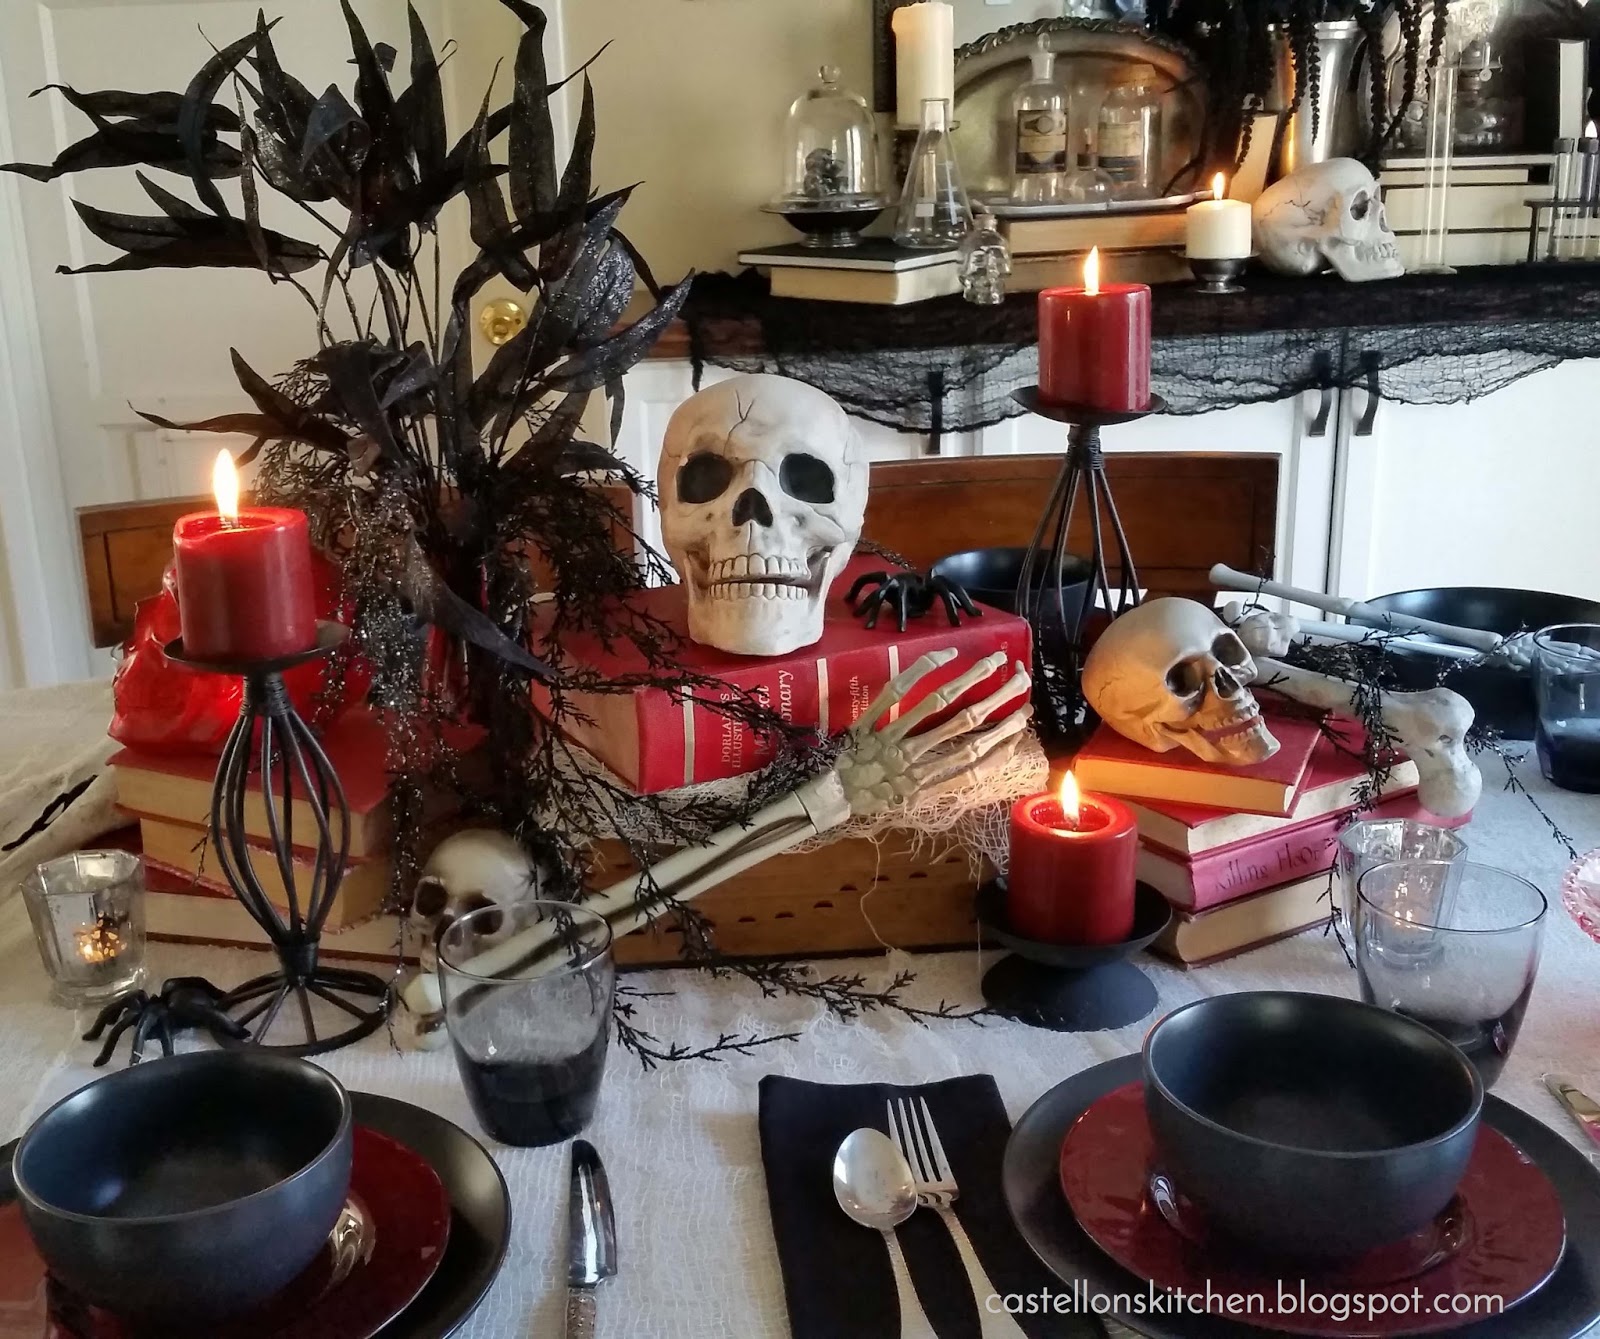 Castellon's Kitchen: Halloween Decorating 2016